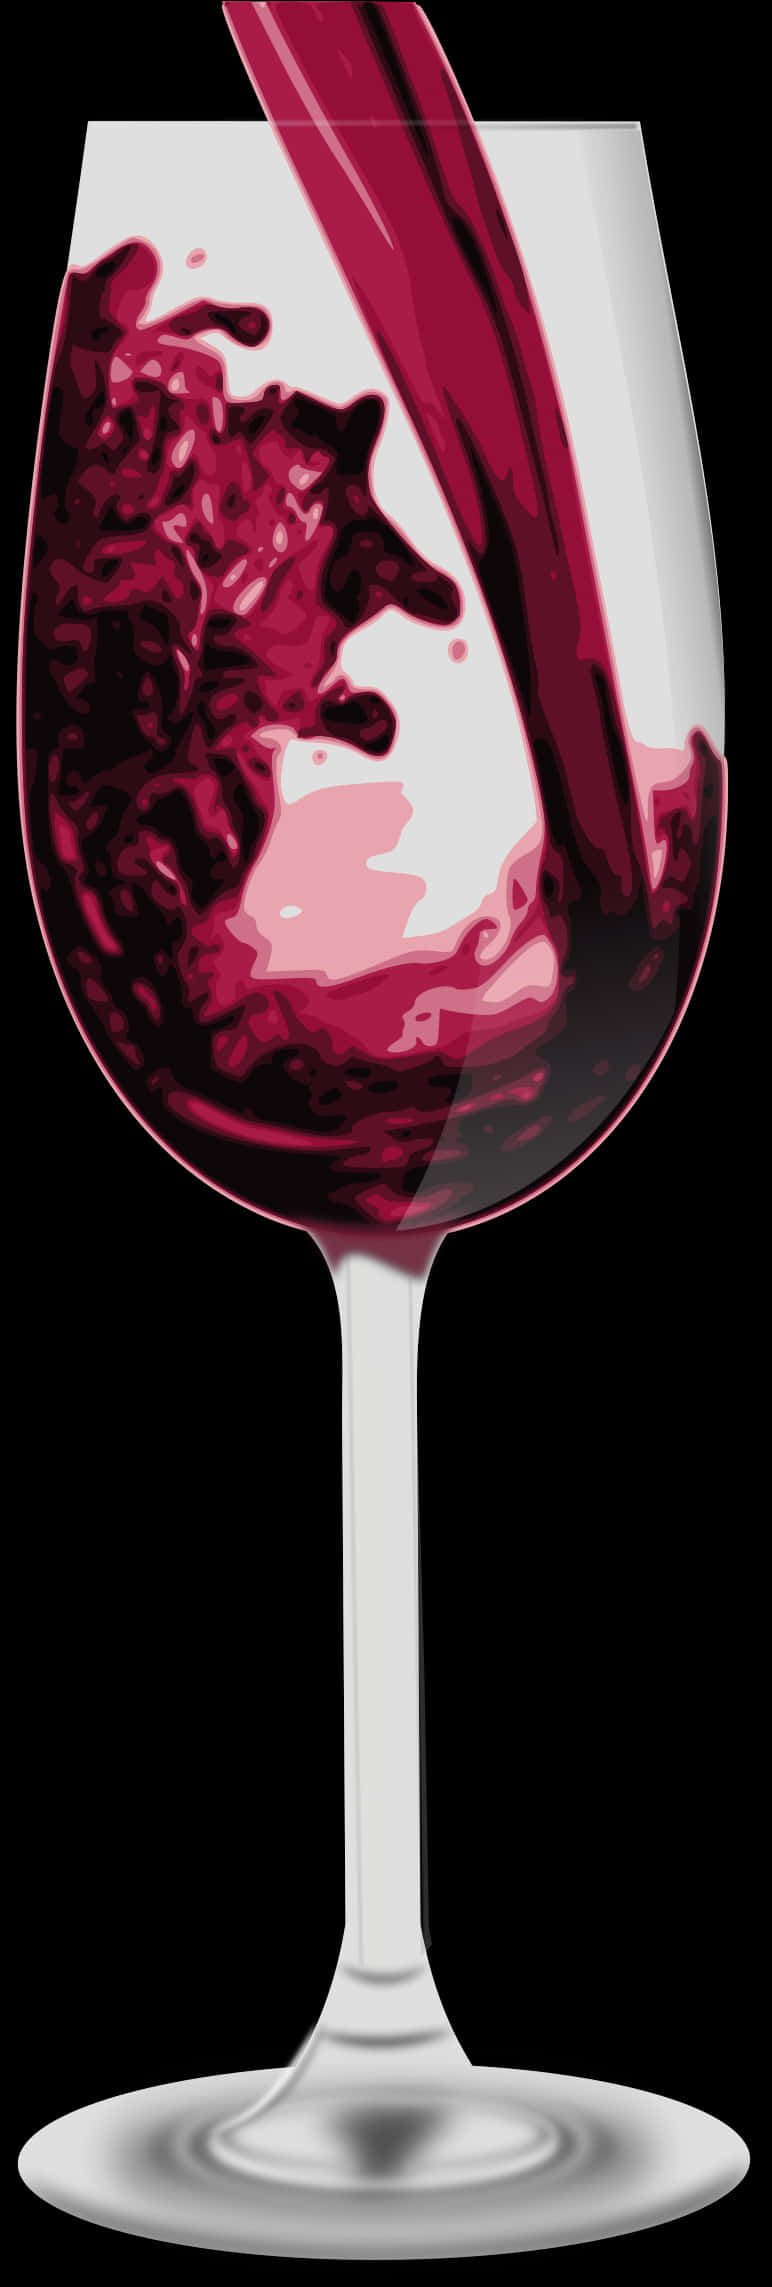 Red Wine Splashin Glass.jpg PNG image